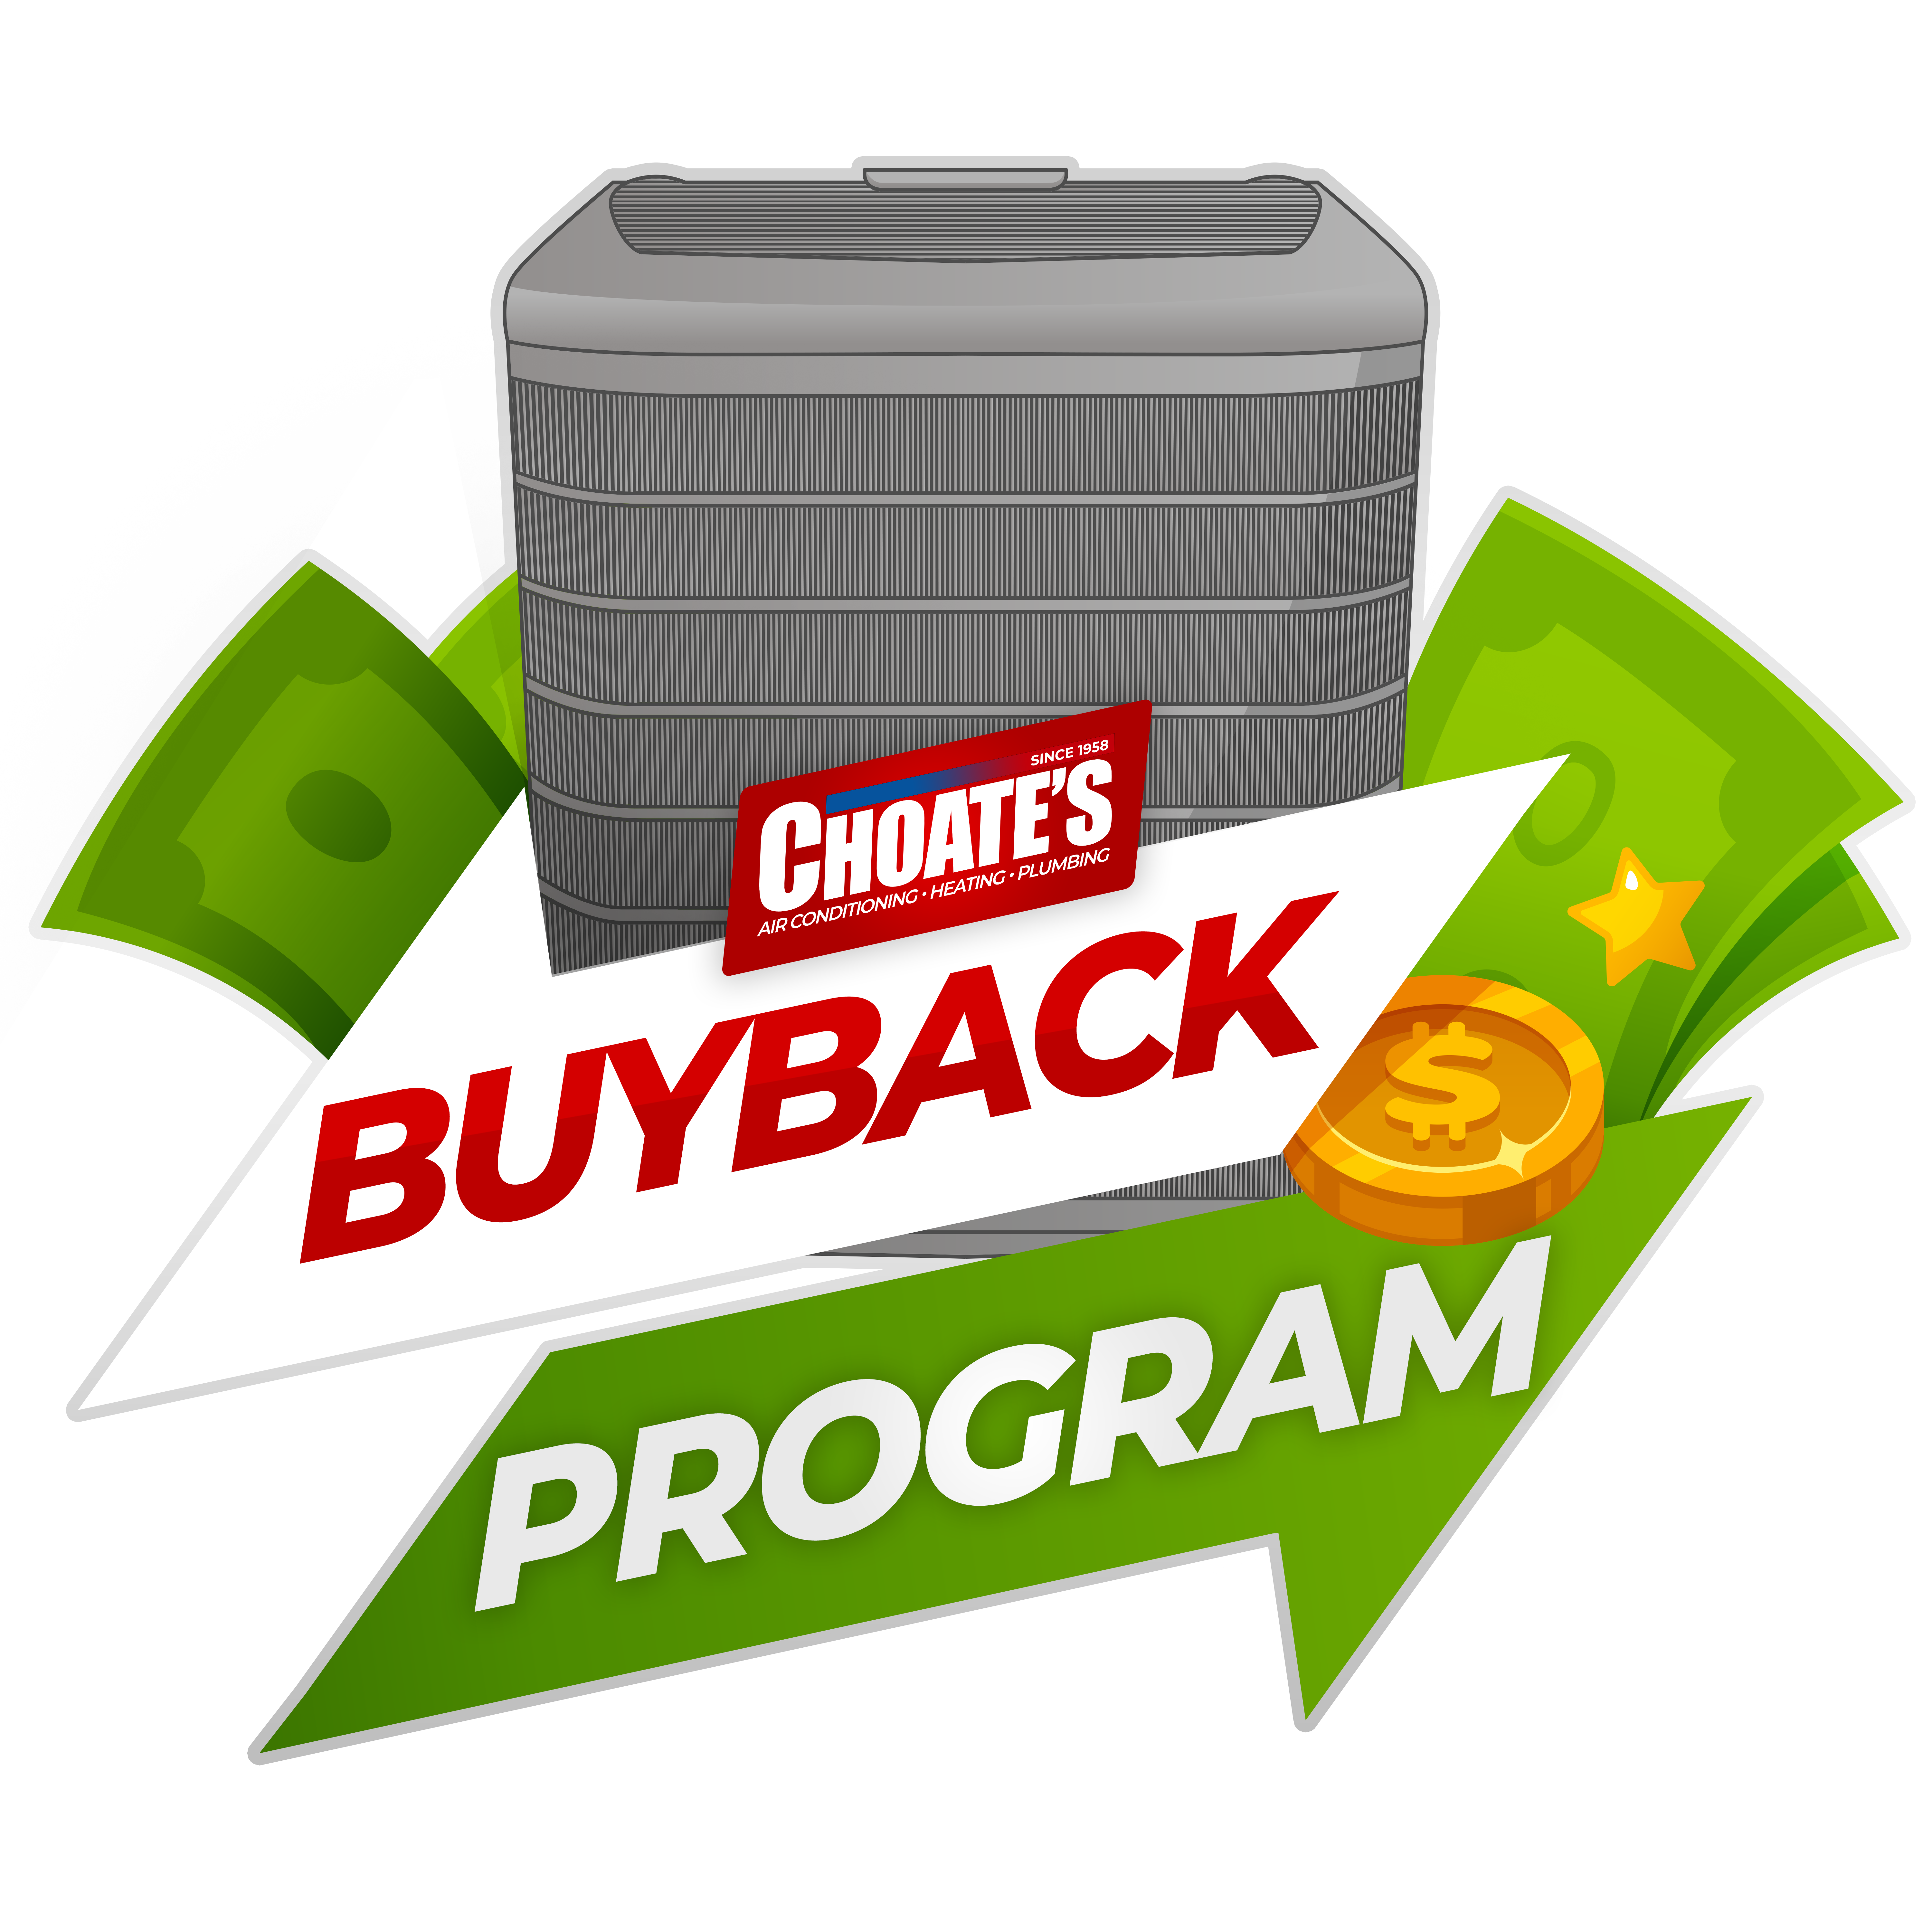 choate's buyback program